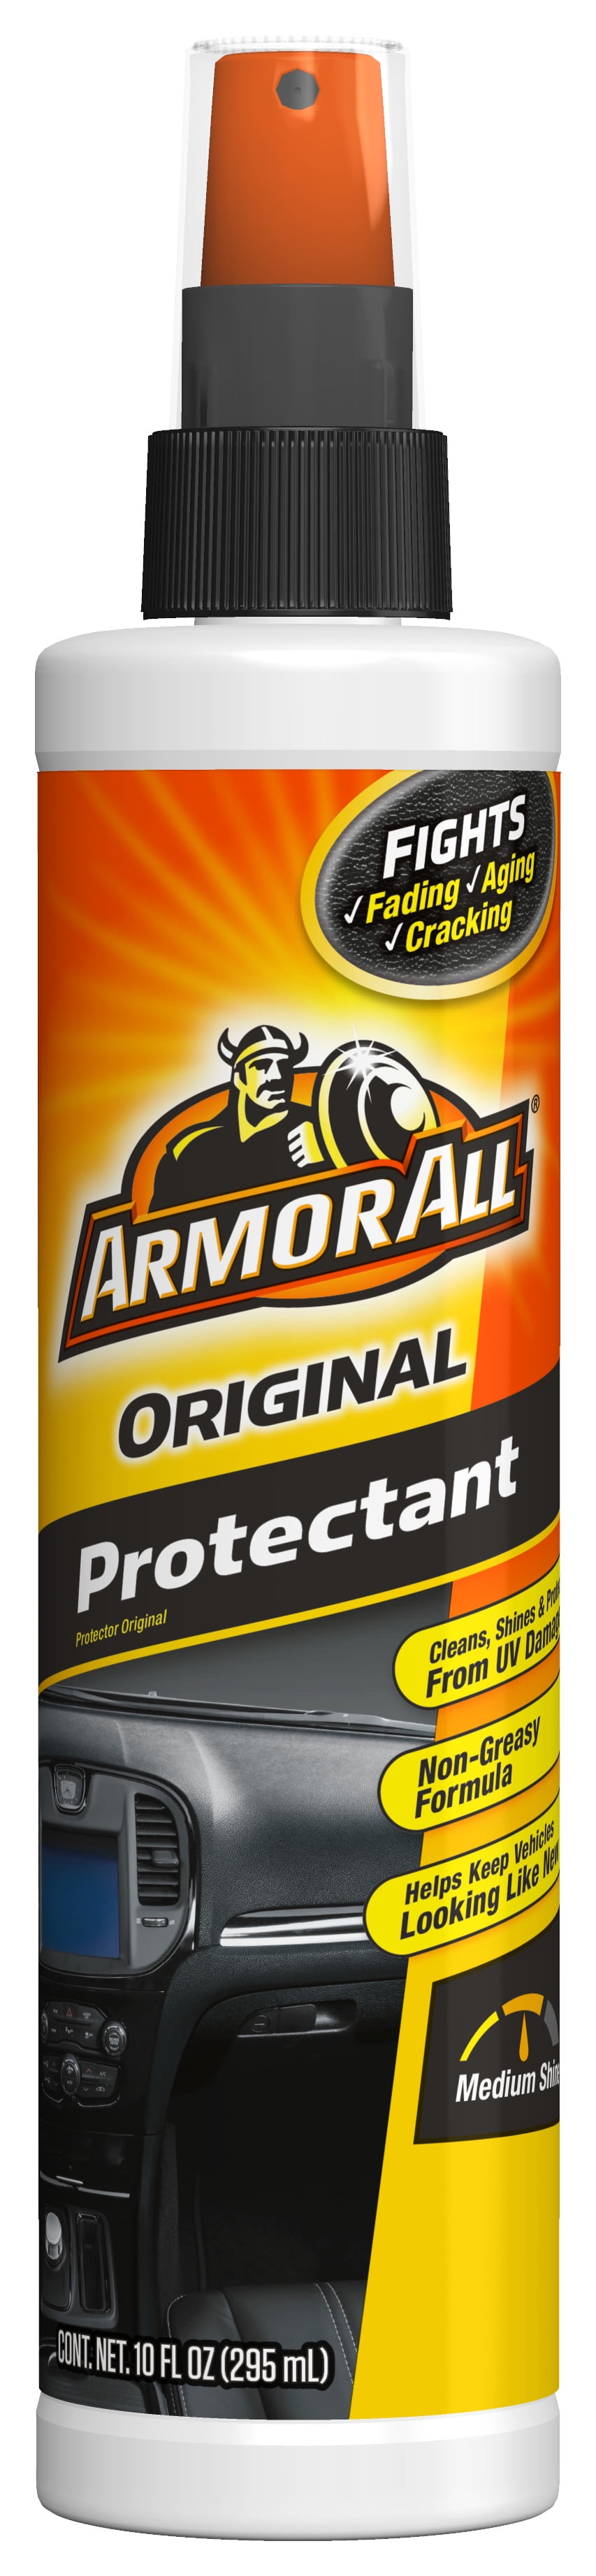 Armor All® Original Protectant (28 oz Spray Bottles) - Case of 6